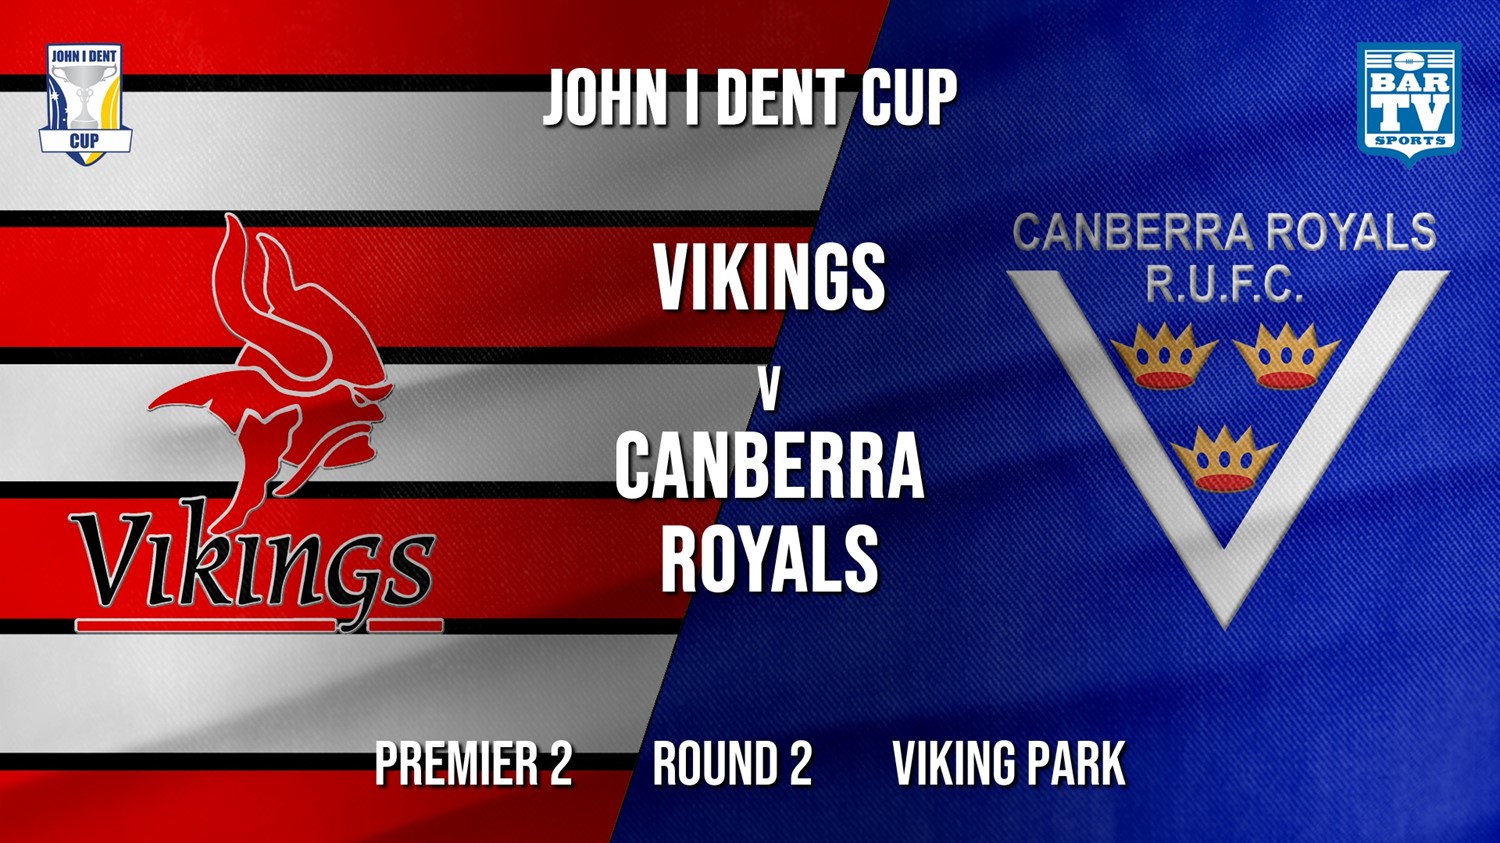 John I Dent Round 2 - Premier 2 - Tuggeranong Vikings v Canberra Royals Minigame Slate Image